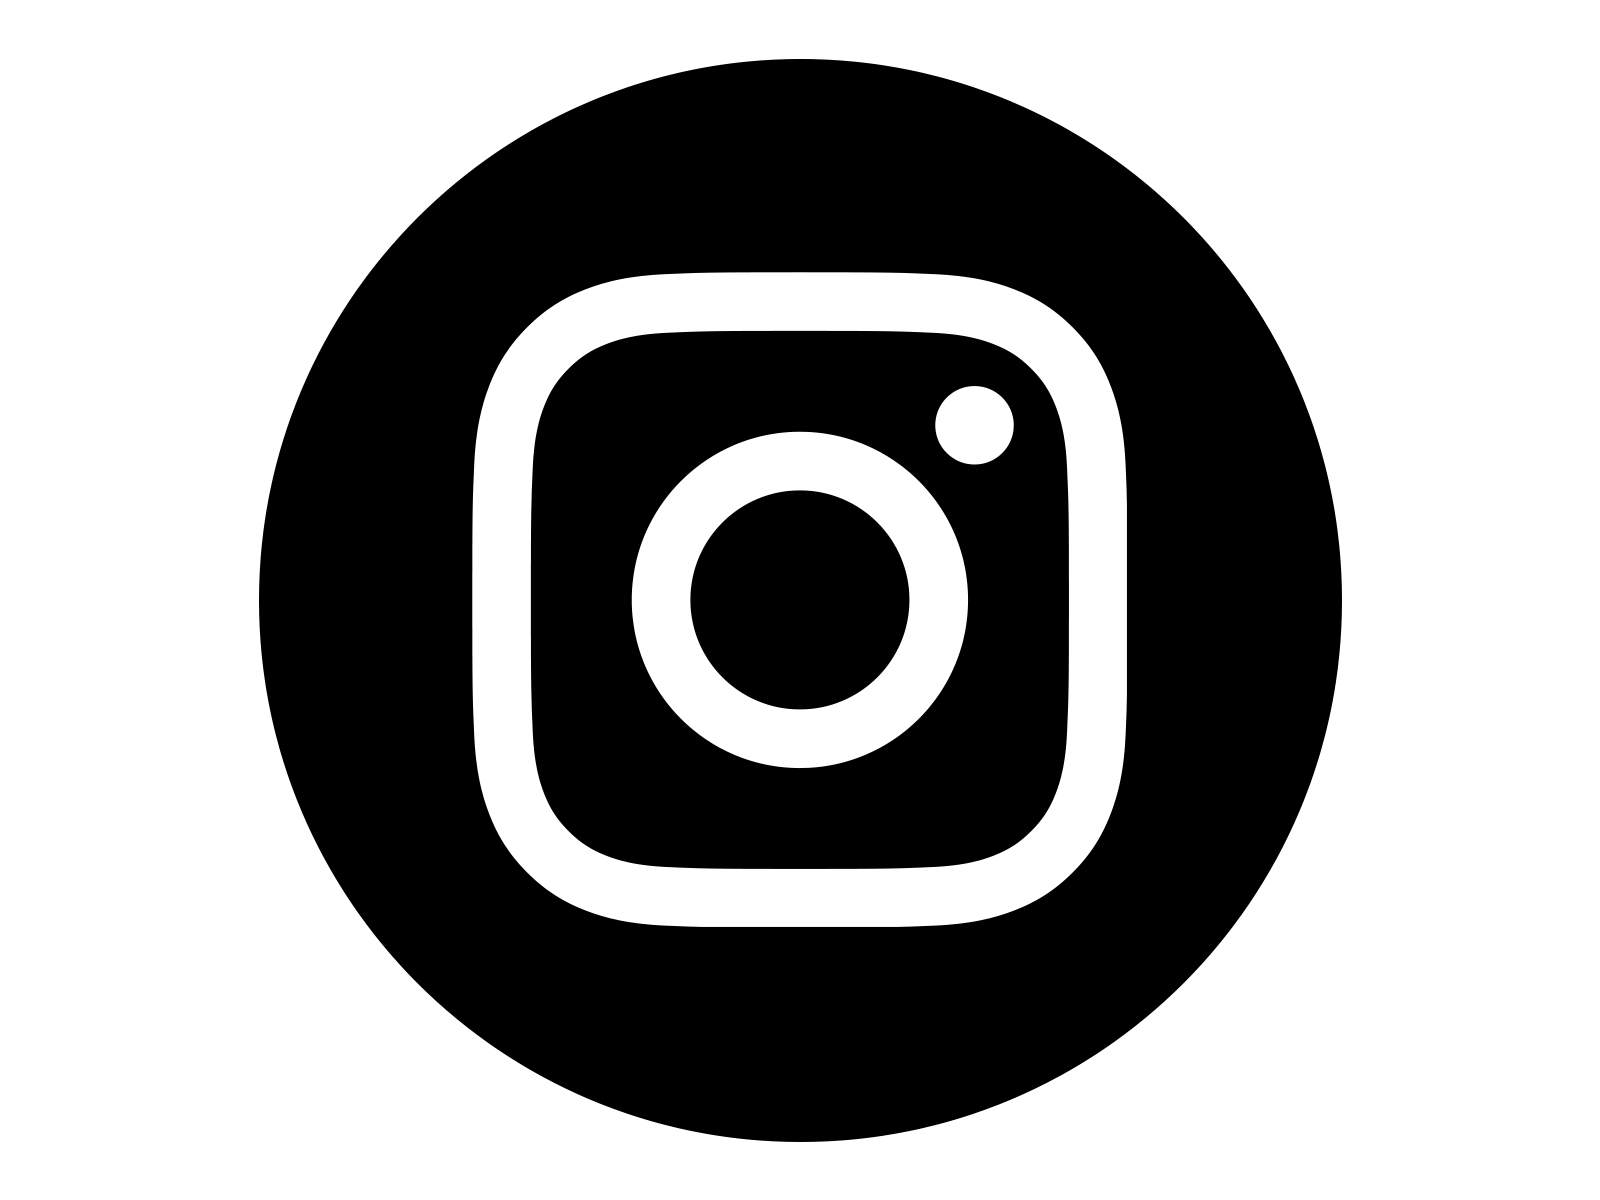 Black White Circle in Circle Logo - Instagram Logo PNG Transparent & SVG Vector - Freebie Supply